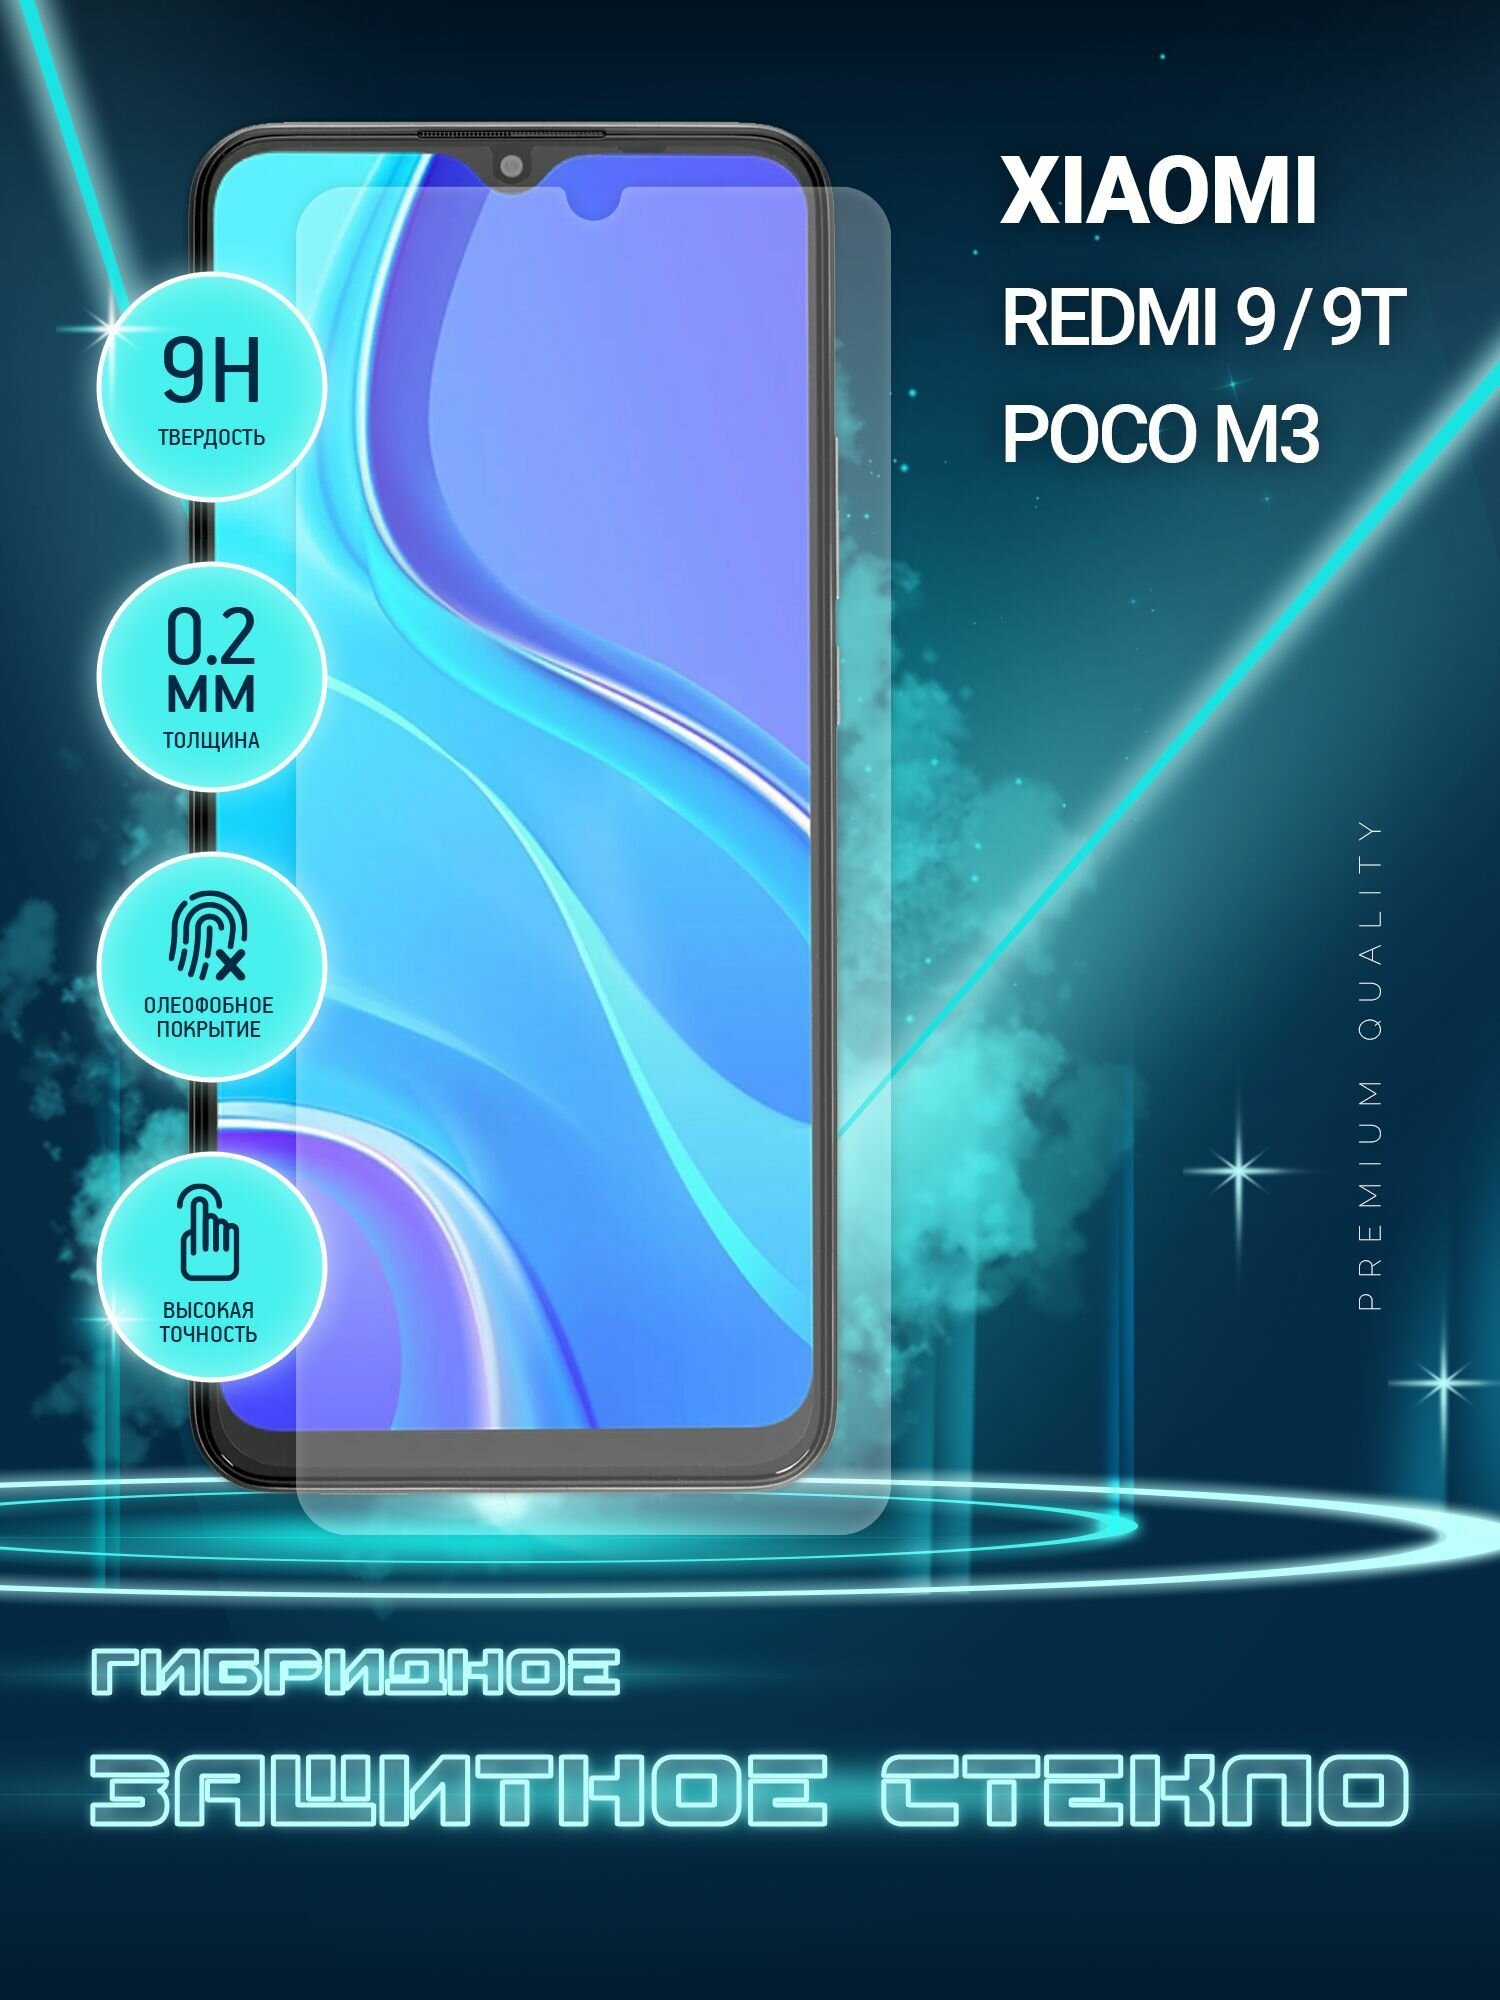 Защитное стекло для Xiaomi Redmi 9, 9T, Poco M3, Сяоми Редми 9, 9Т, Поко М3, Ксиоми на экран, гибридное (пленка + стекловолокно), Crystal boost